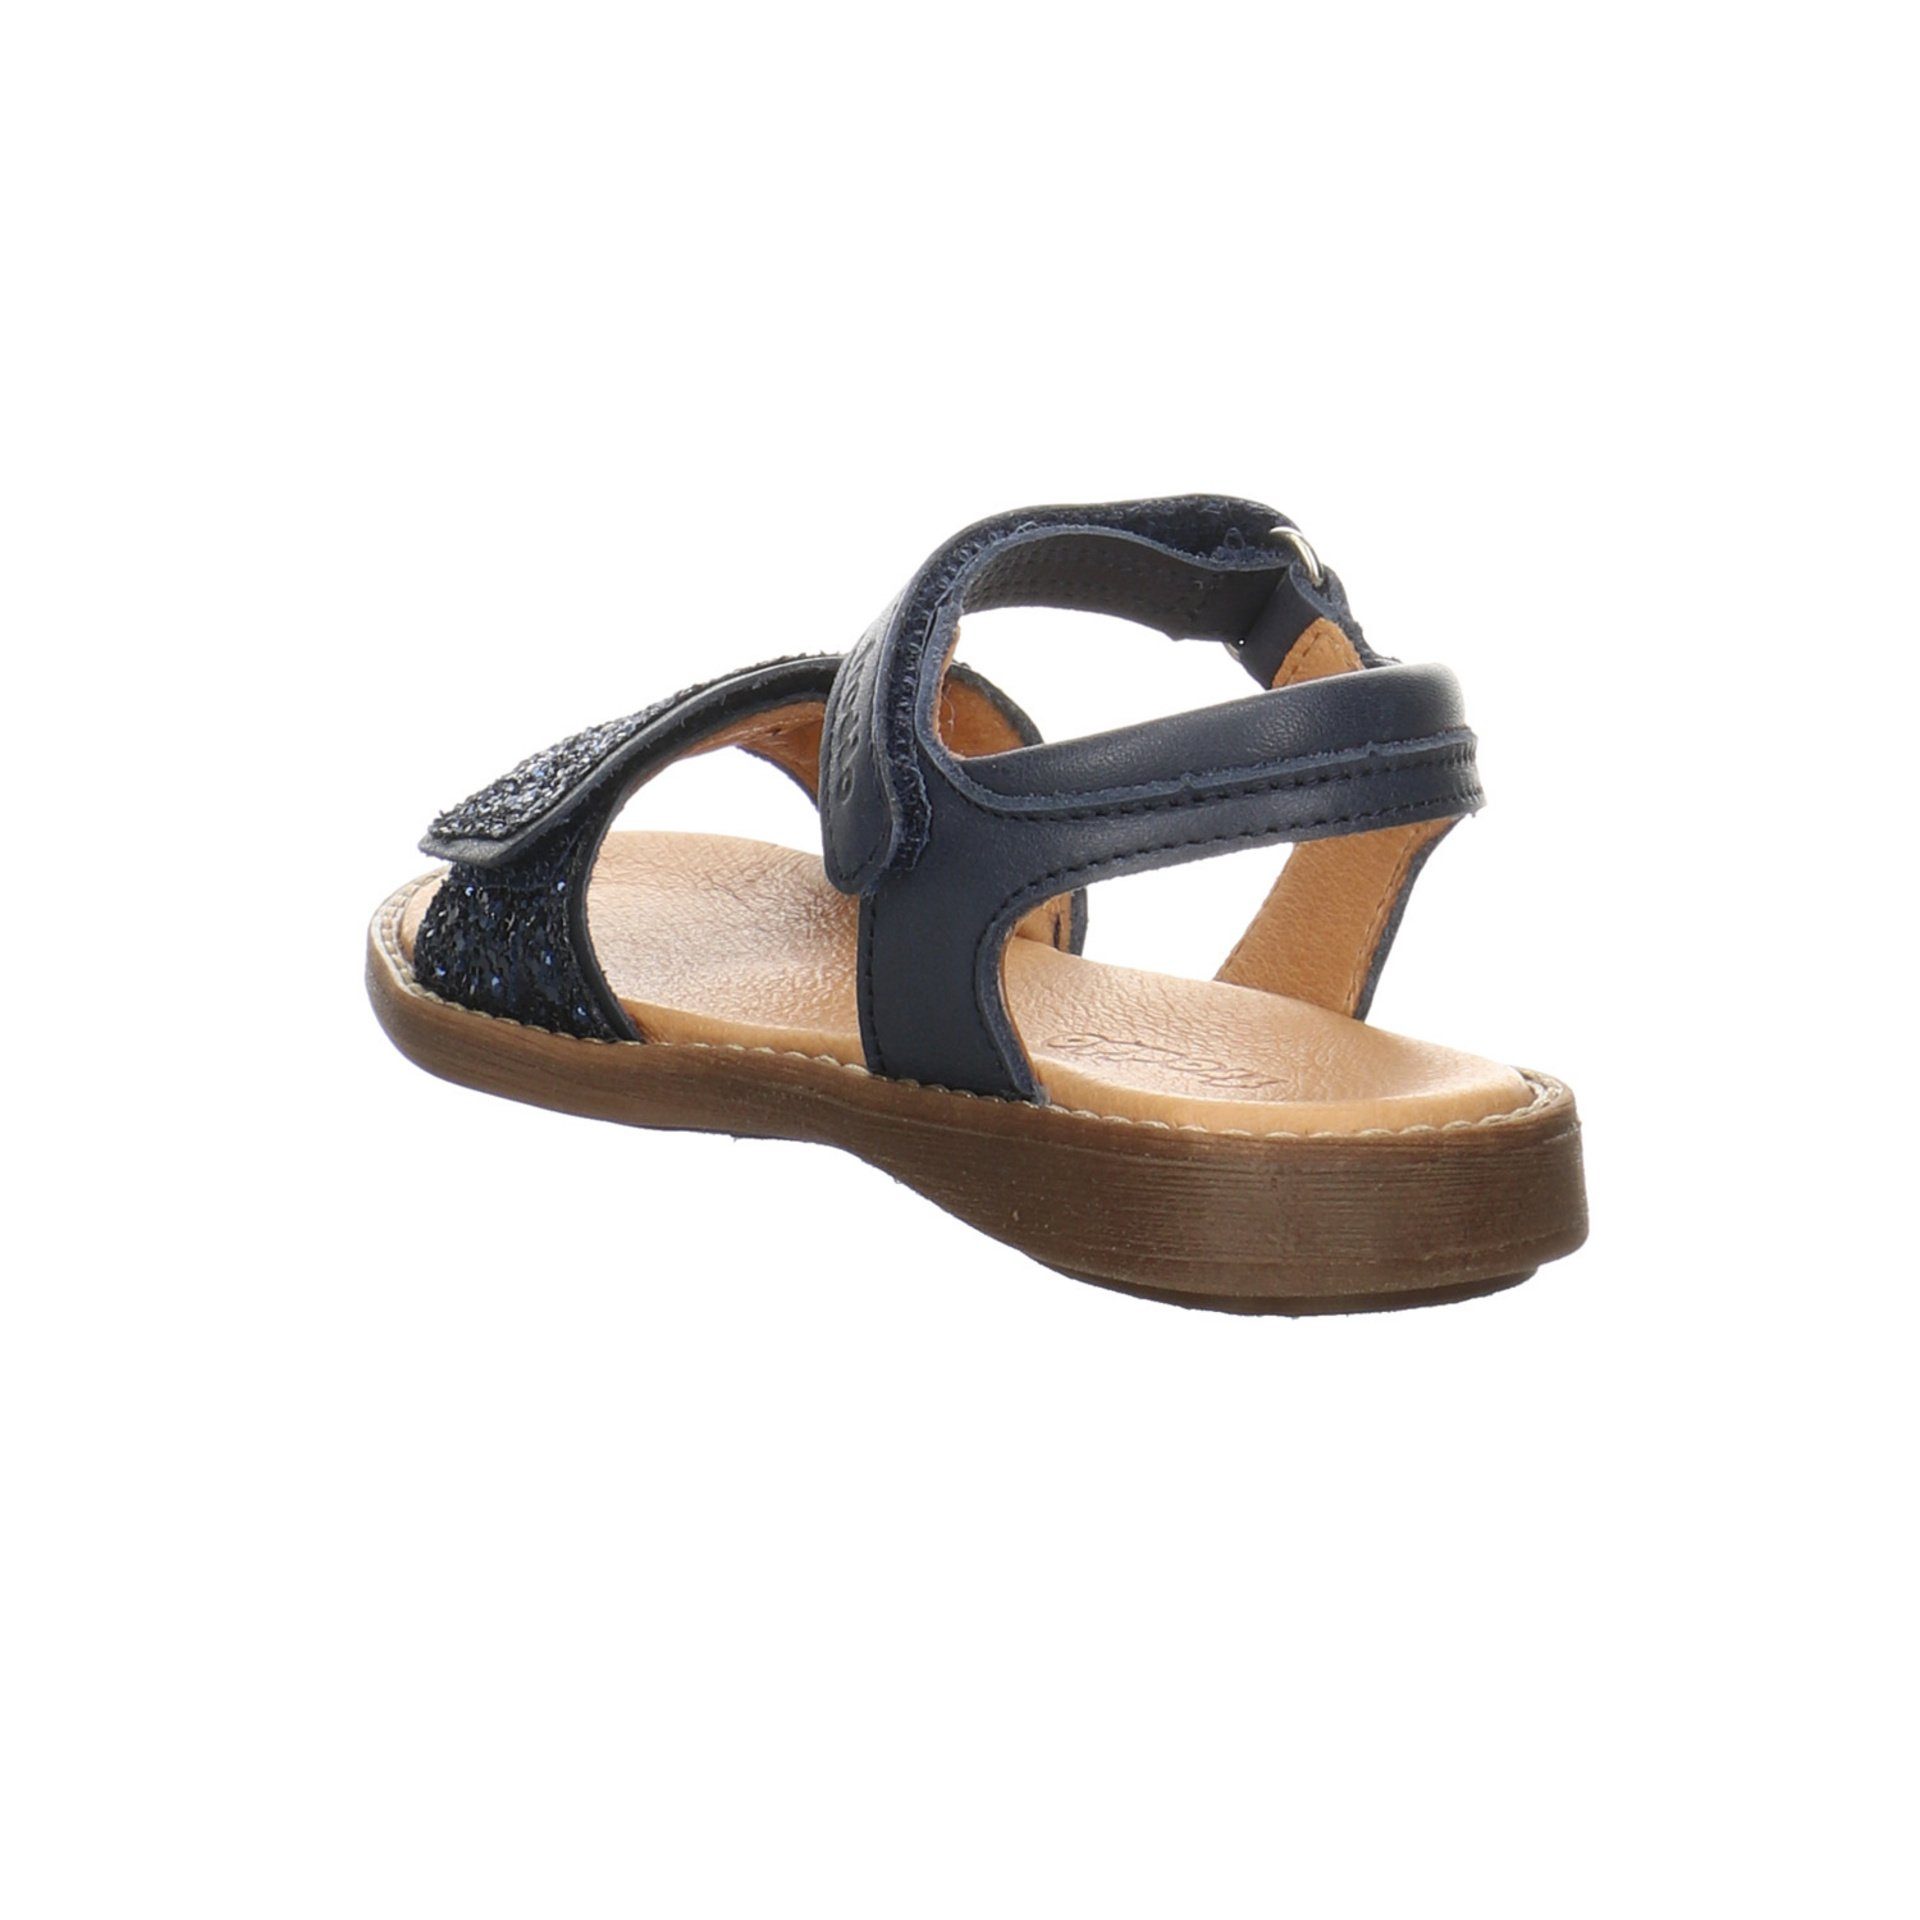 Sandale froddo® Sandale Mädchen Sandalen Schuhe Lore Leder-/Textilkombination Sparkle